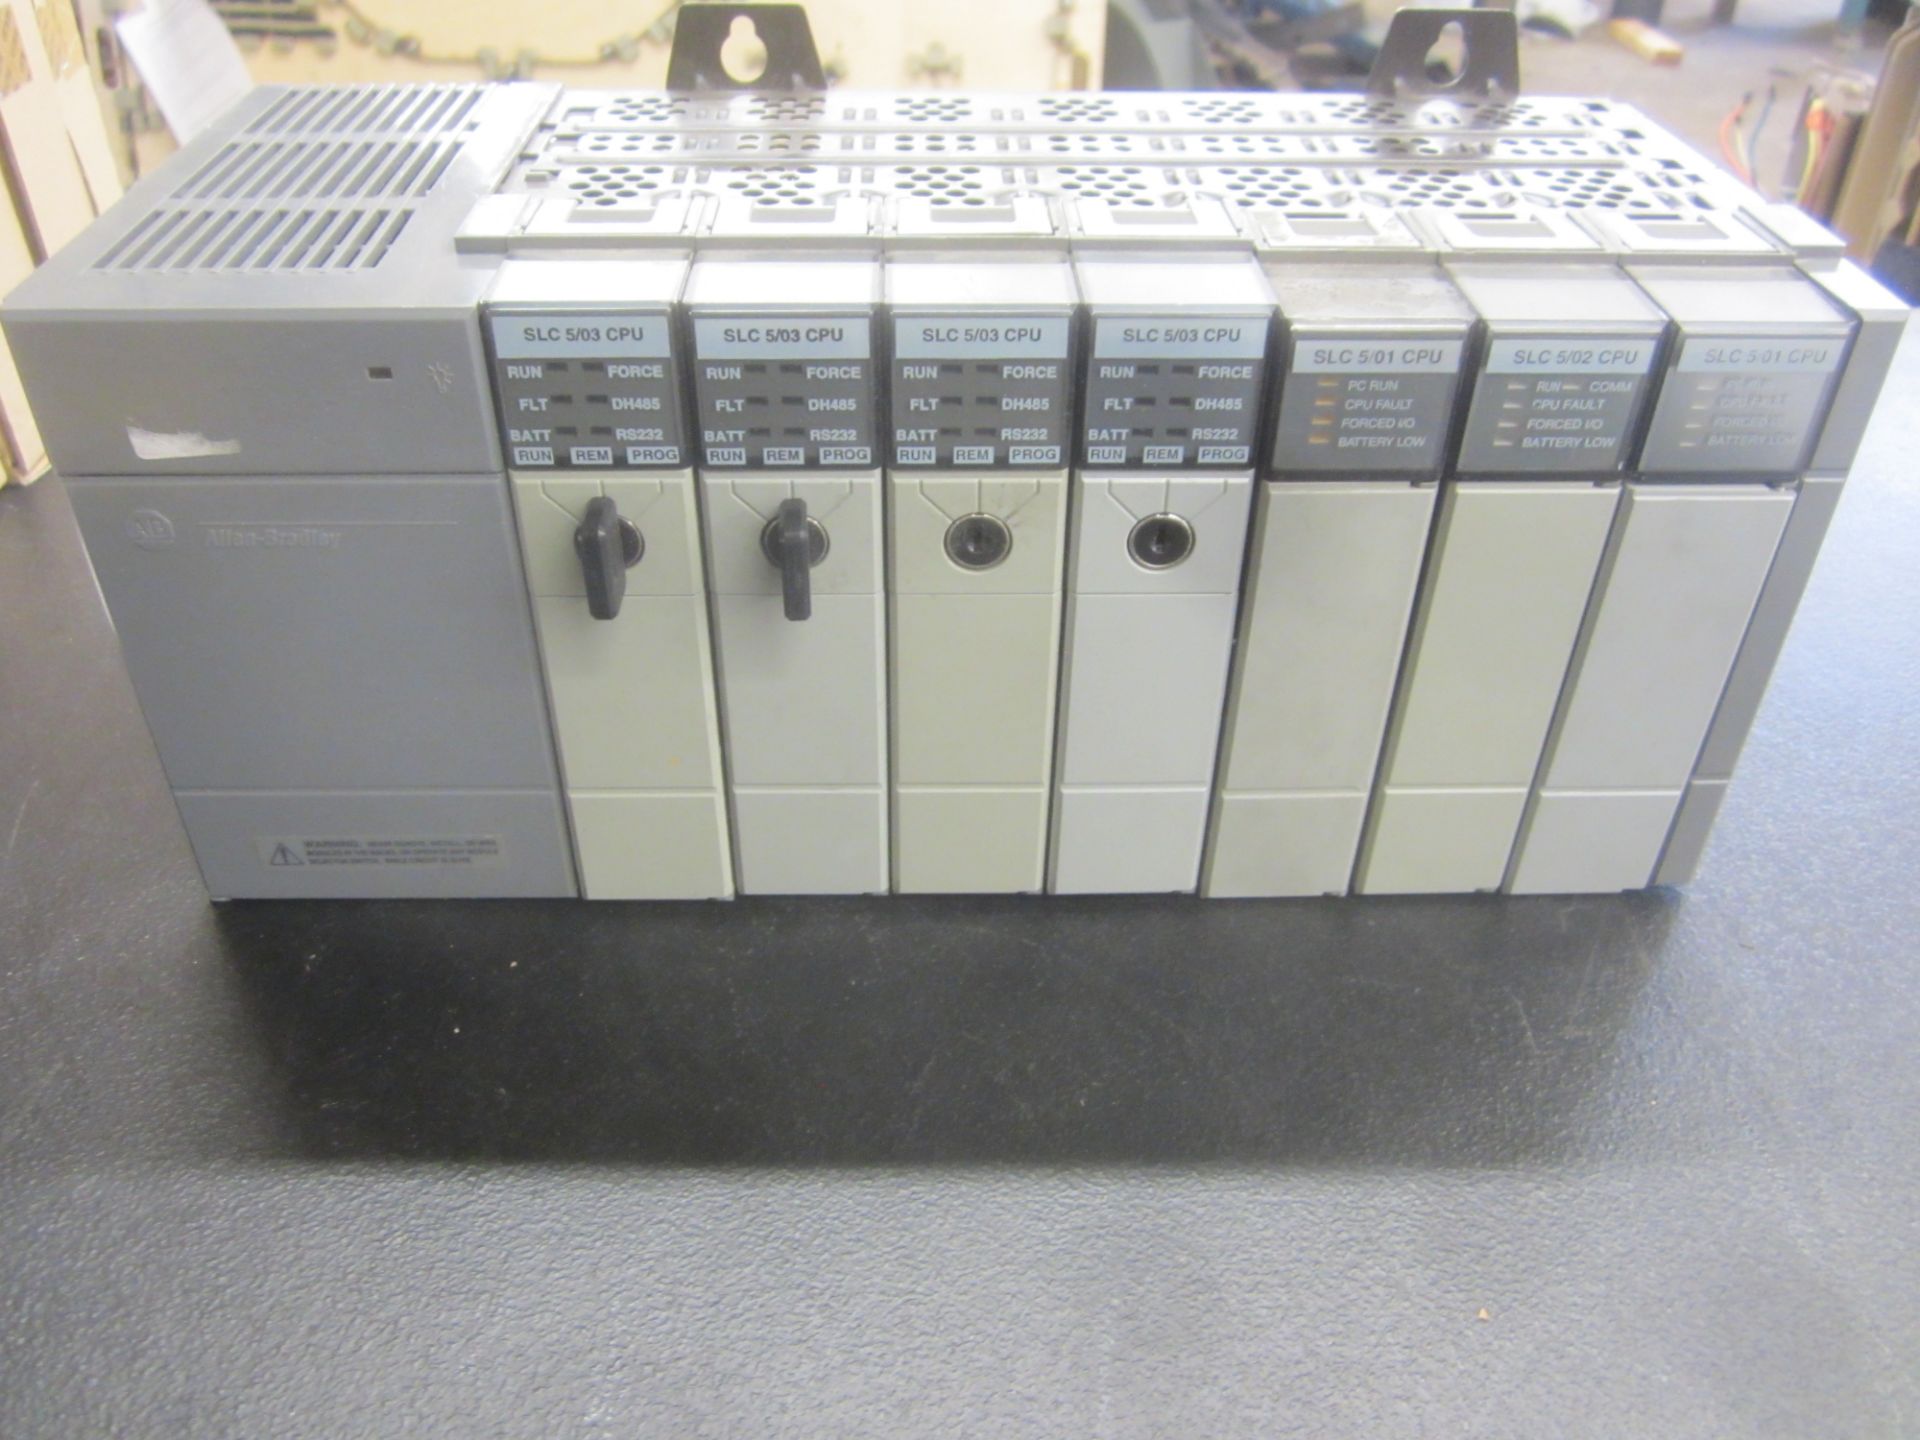 Allen Bradley SLC500 7-Slot Rack Model 1746-A7, with (4) SLC5/03 CPU's, (2) SLC 5/0i CPU's, and (